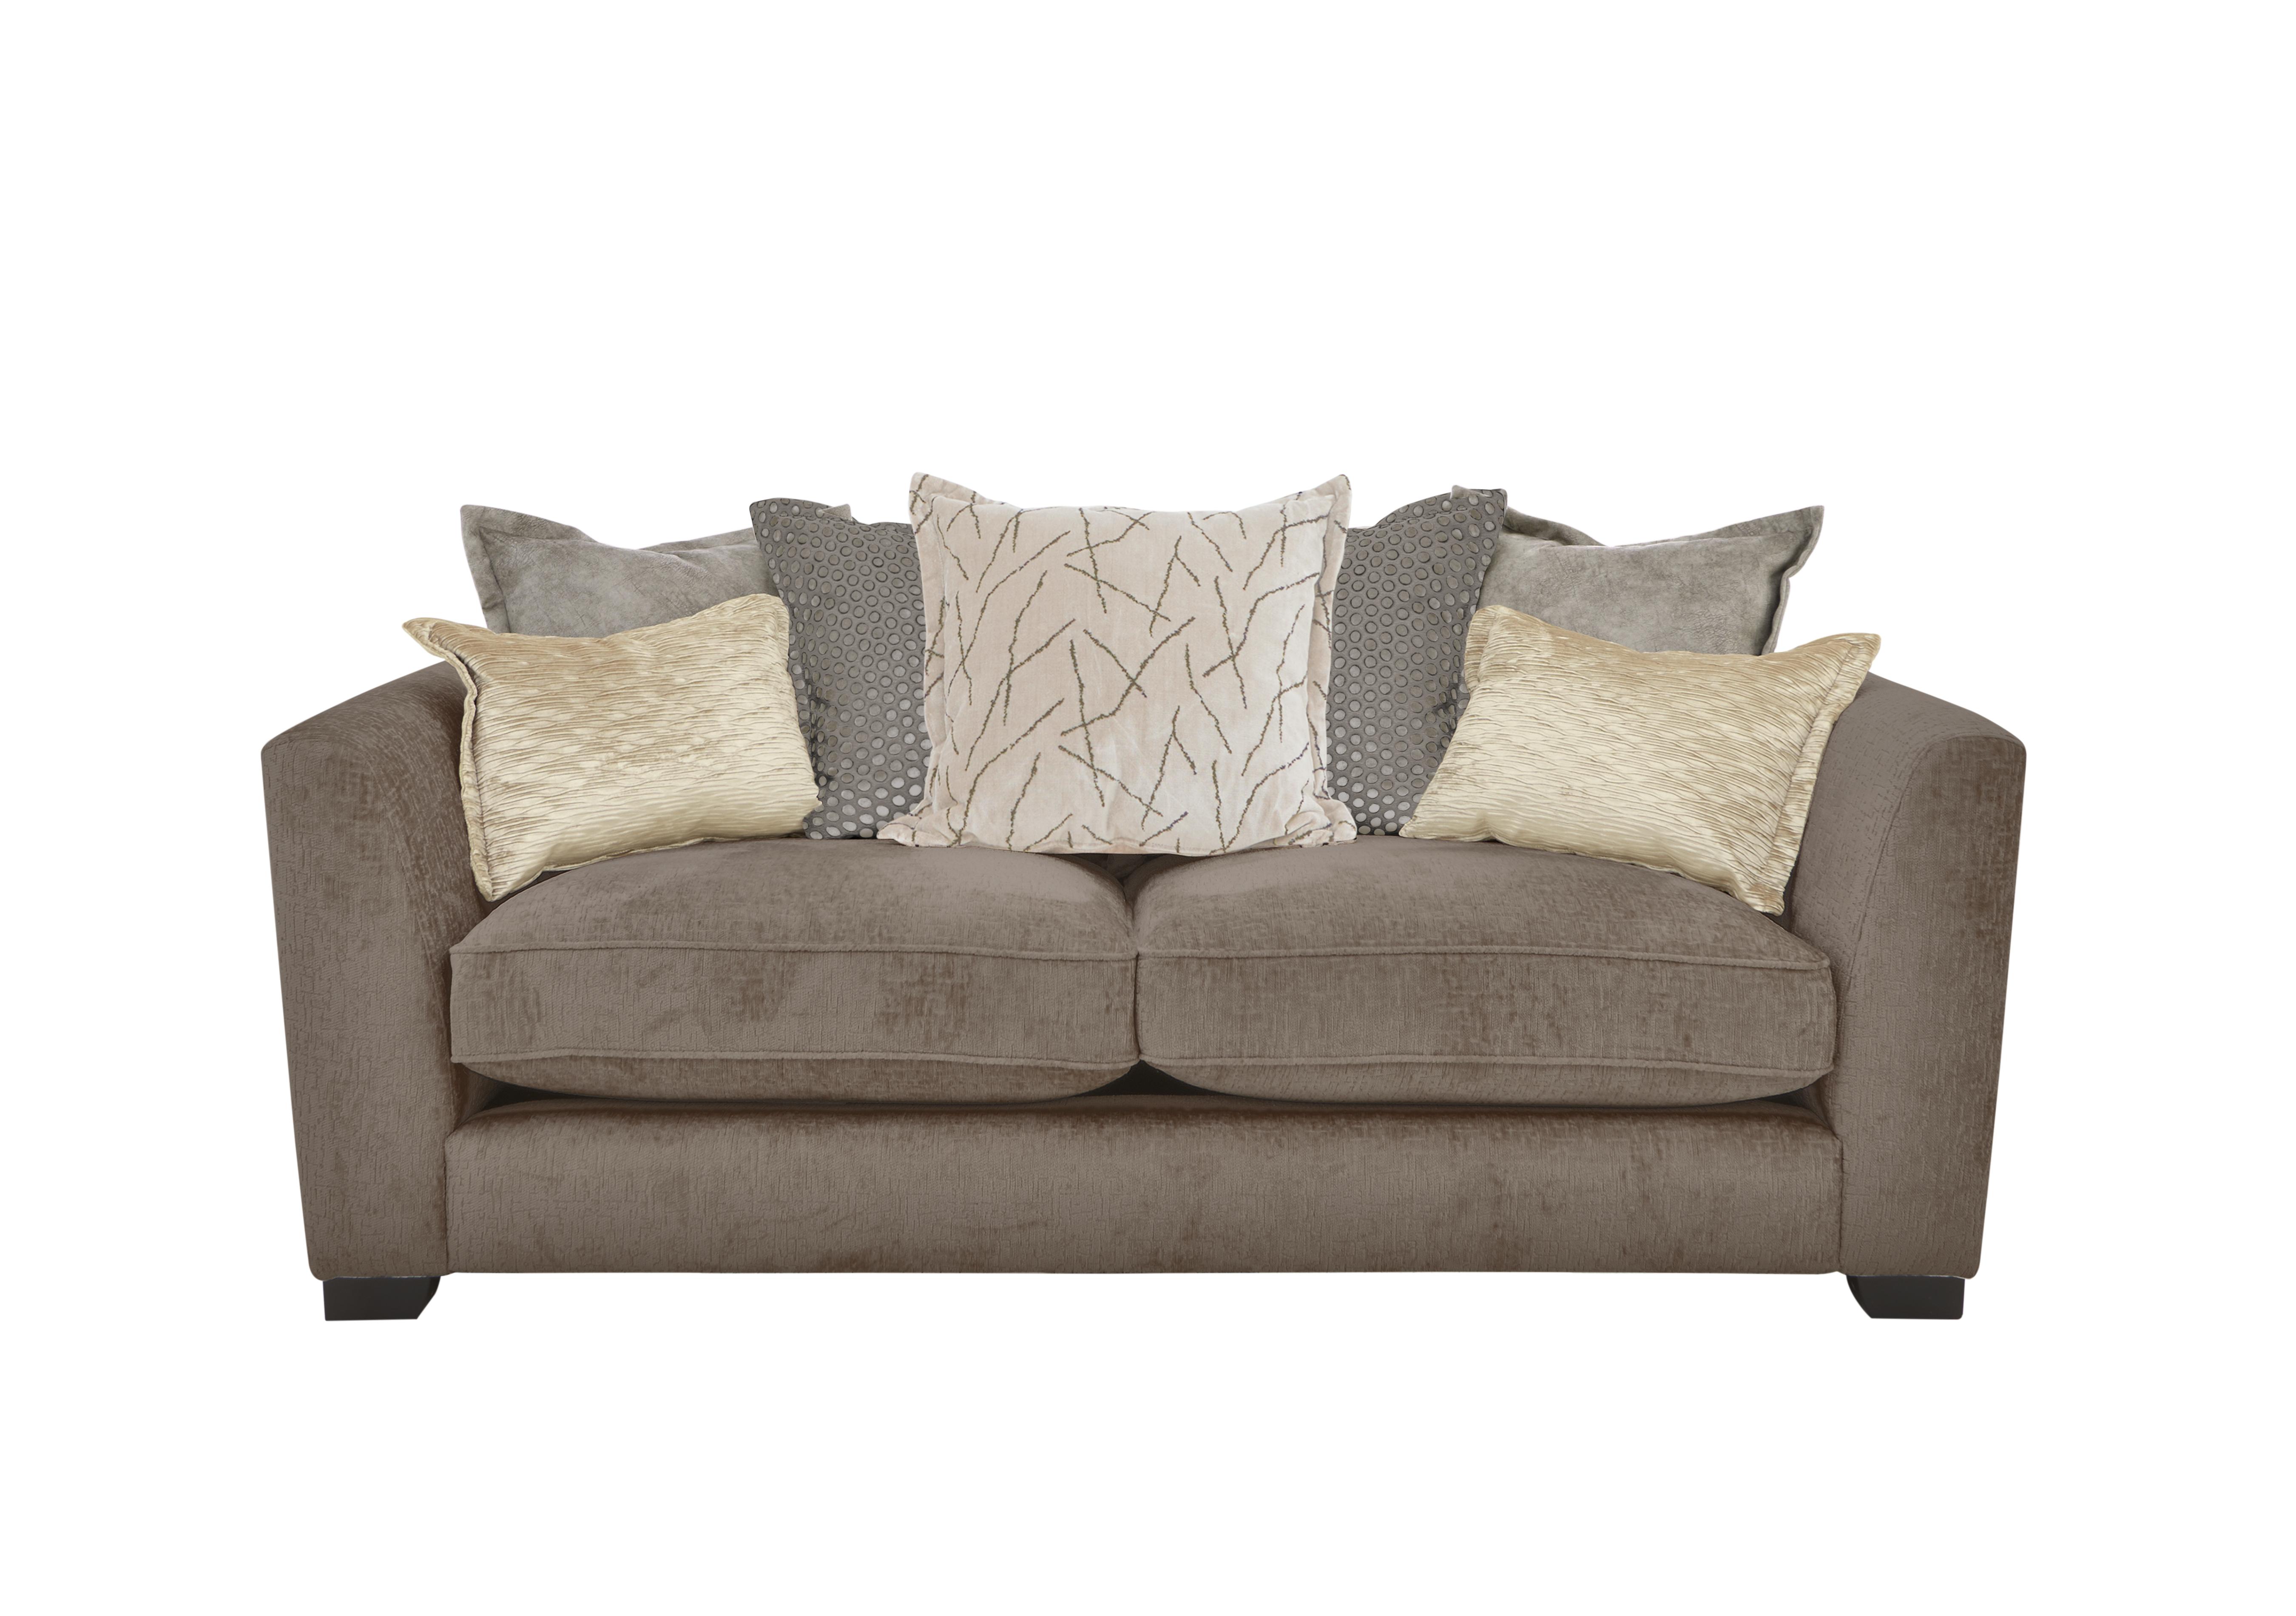 Boutique Lavish Fabric 3 Seater Scatter Back Sofa in Alexandra Coco on Furniture Village